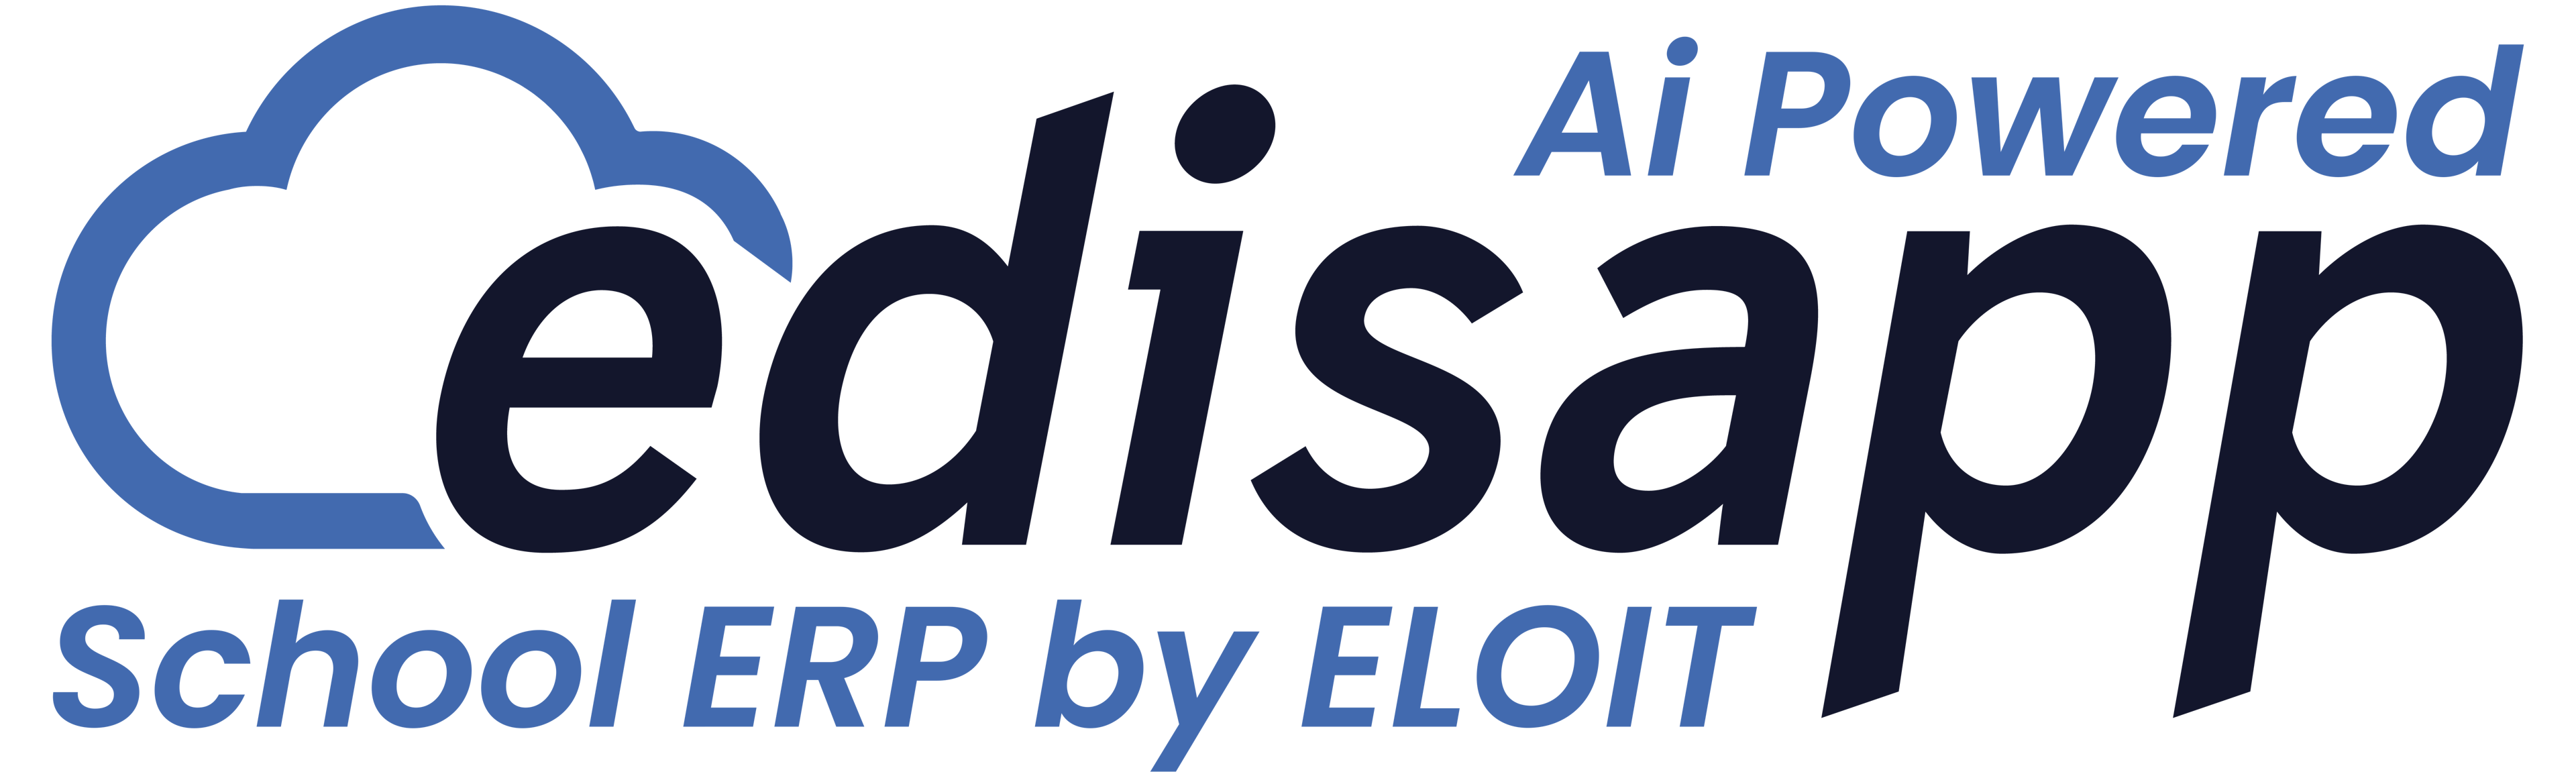 Edisapp School ERP Logo